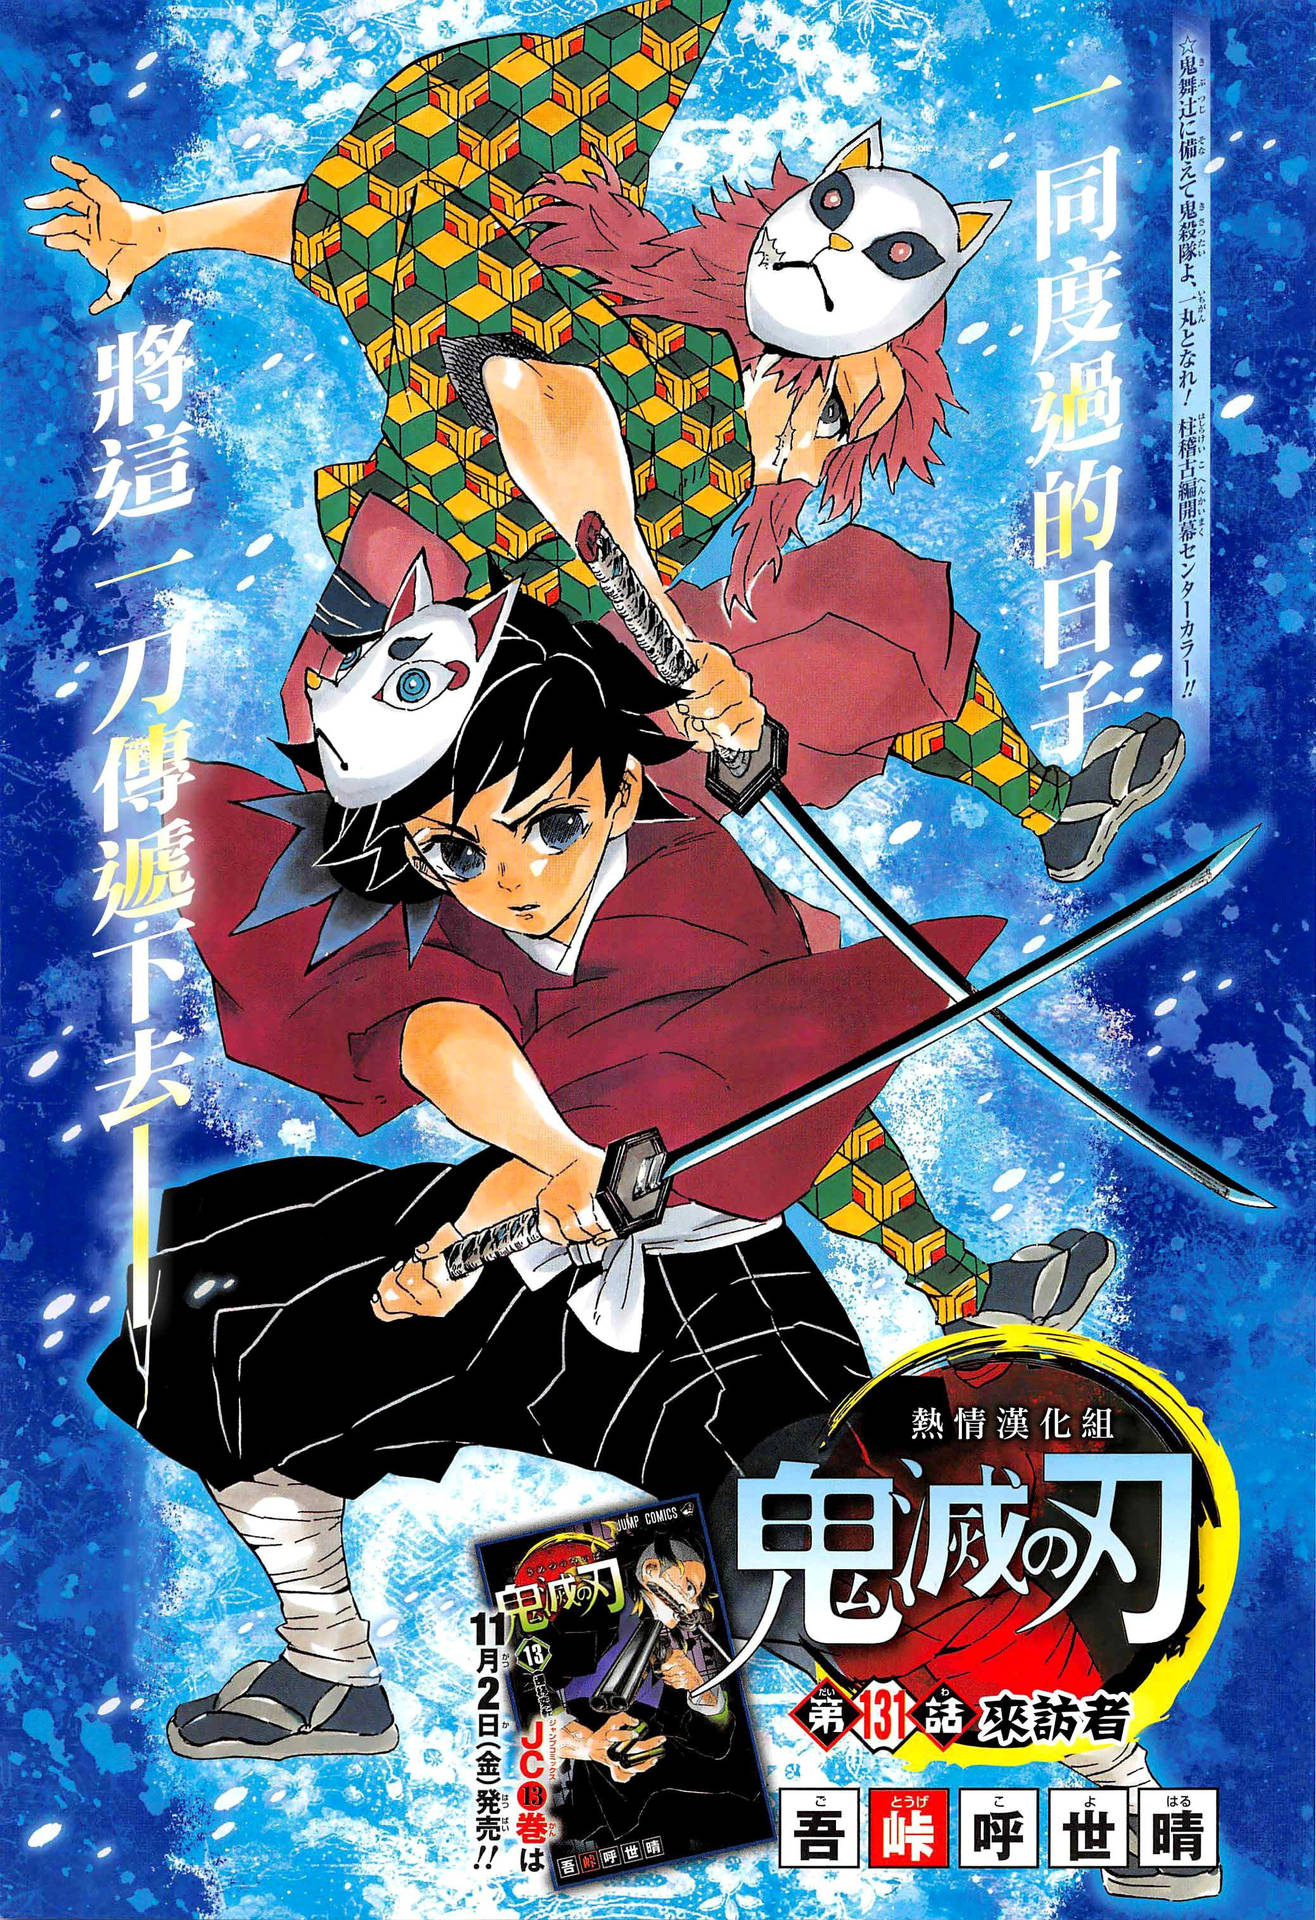 A Poster For The Anime Series Shinobi No Kata Wallpaper